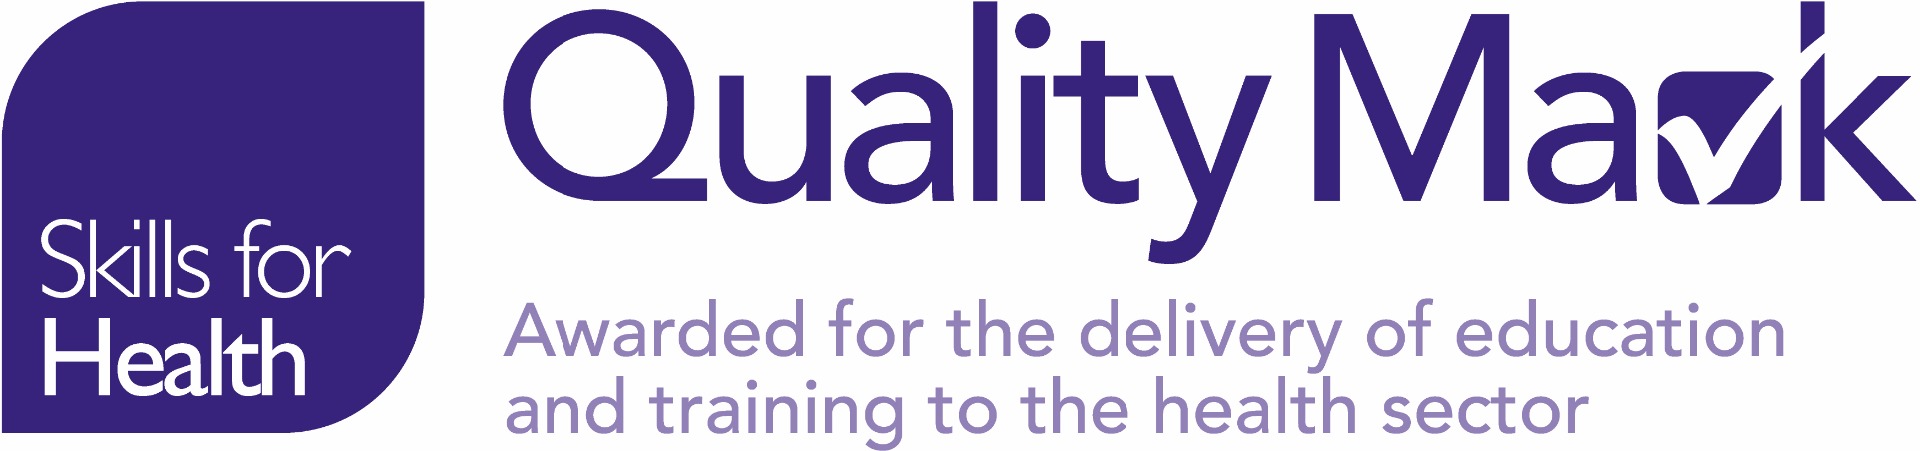 Quality Mark Skills for Health logo